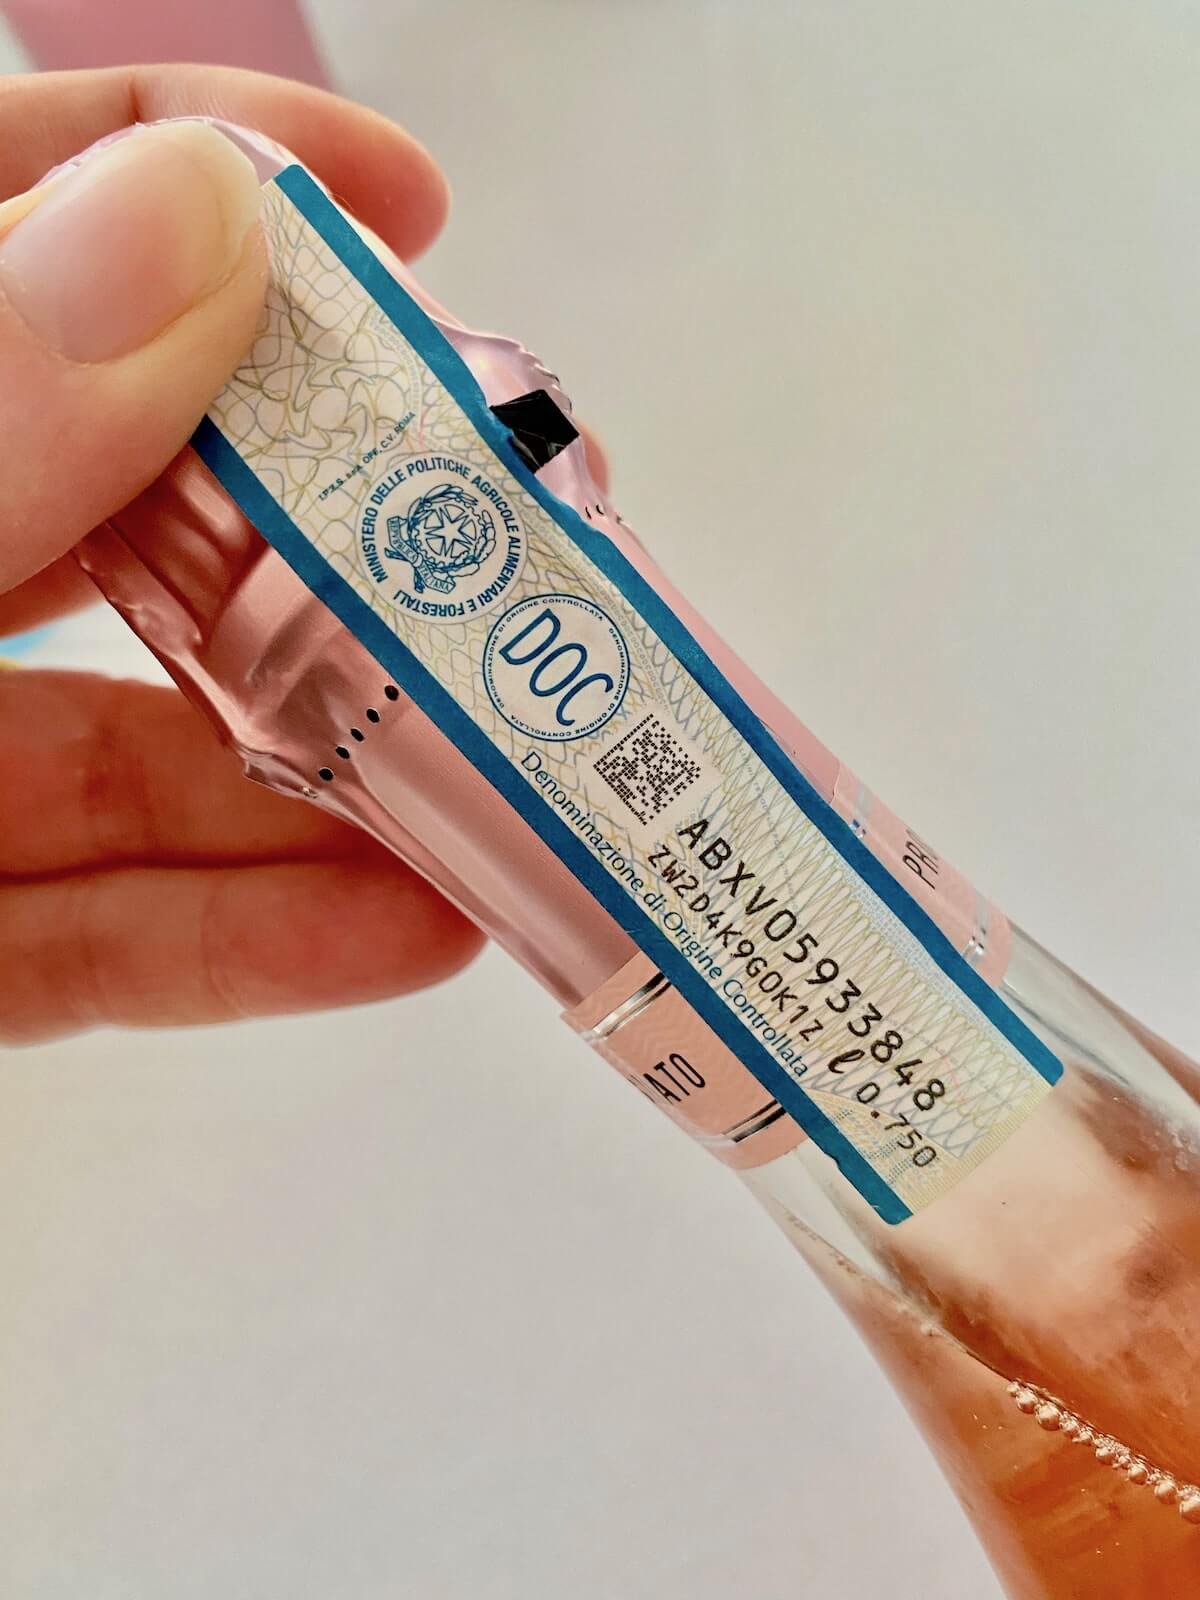 Calneggia Prosecco Rose DOC 2019 - DOC Label on bottle neck